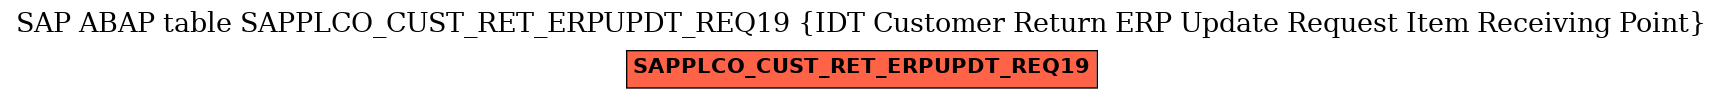 E-R Diagram for table SAPPLCO_CUST_RET_ERPUPDT_REQ19 (IDT Customer Return ERP Update Request Item Receiving Point)